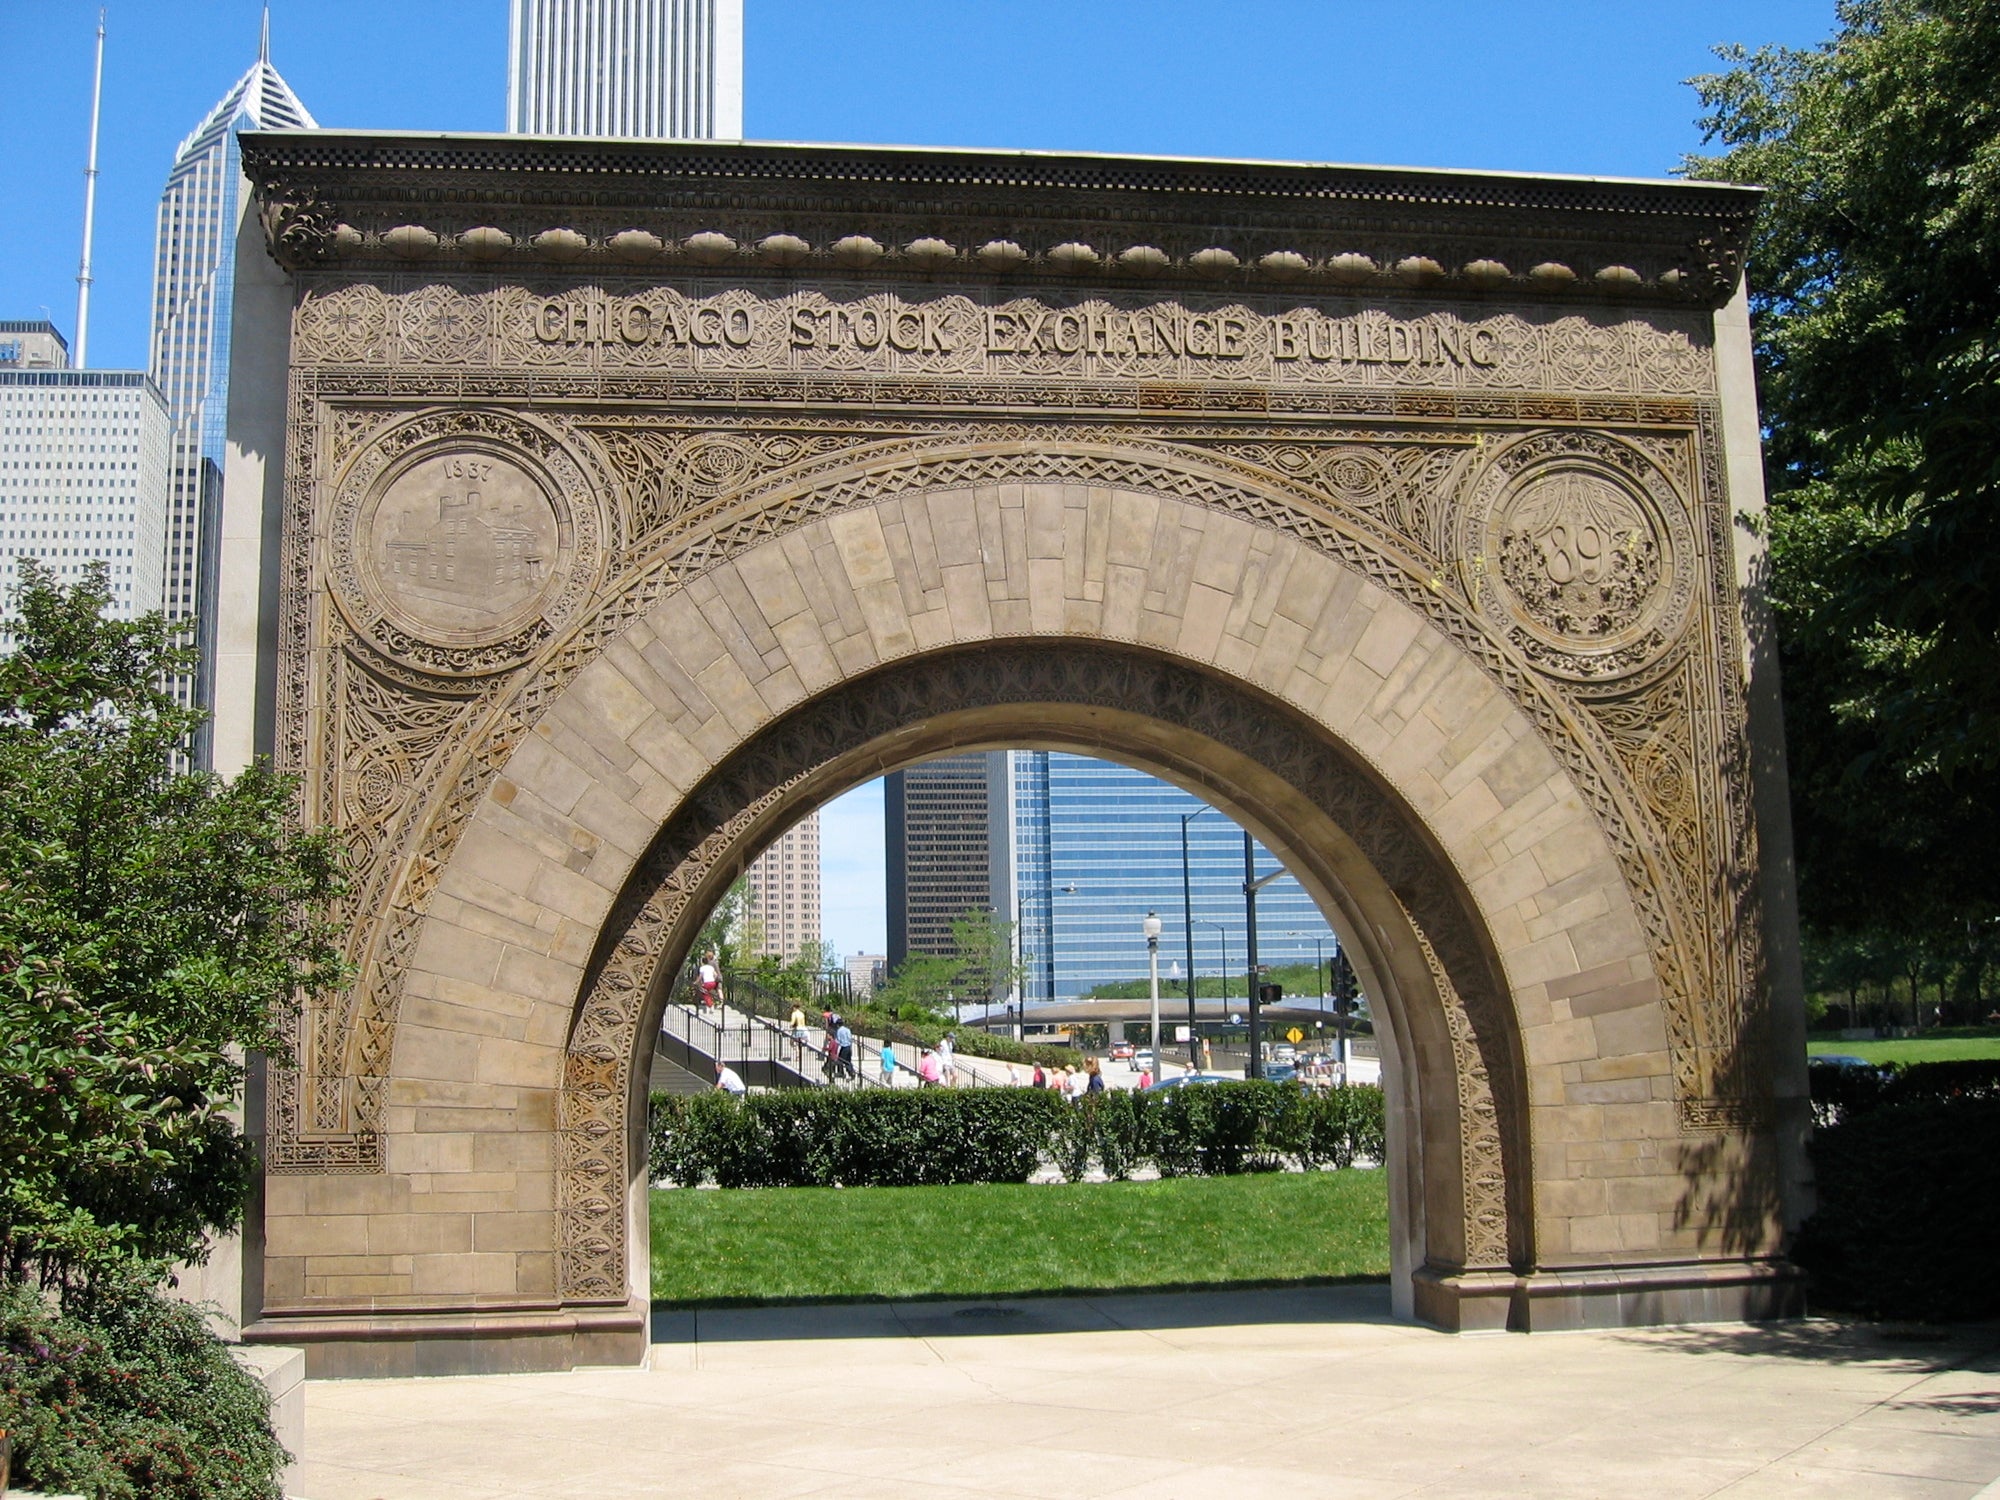 Bolsa de Valores de Chicago - Art Nouveau